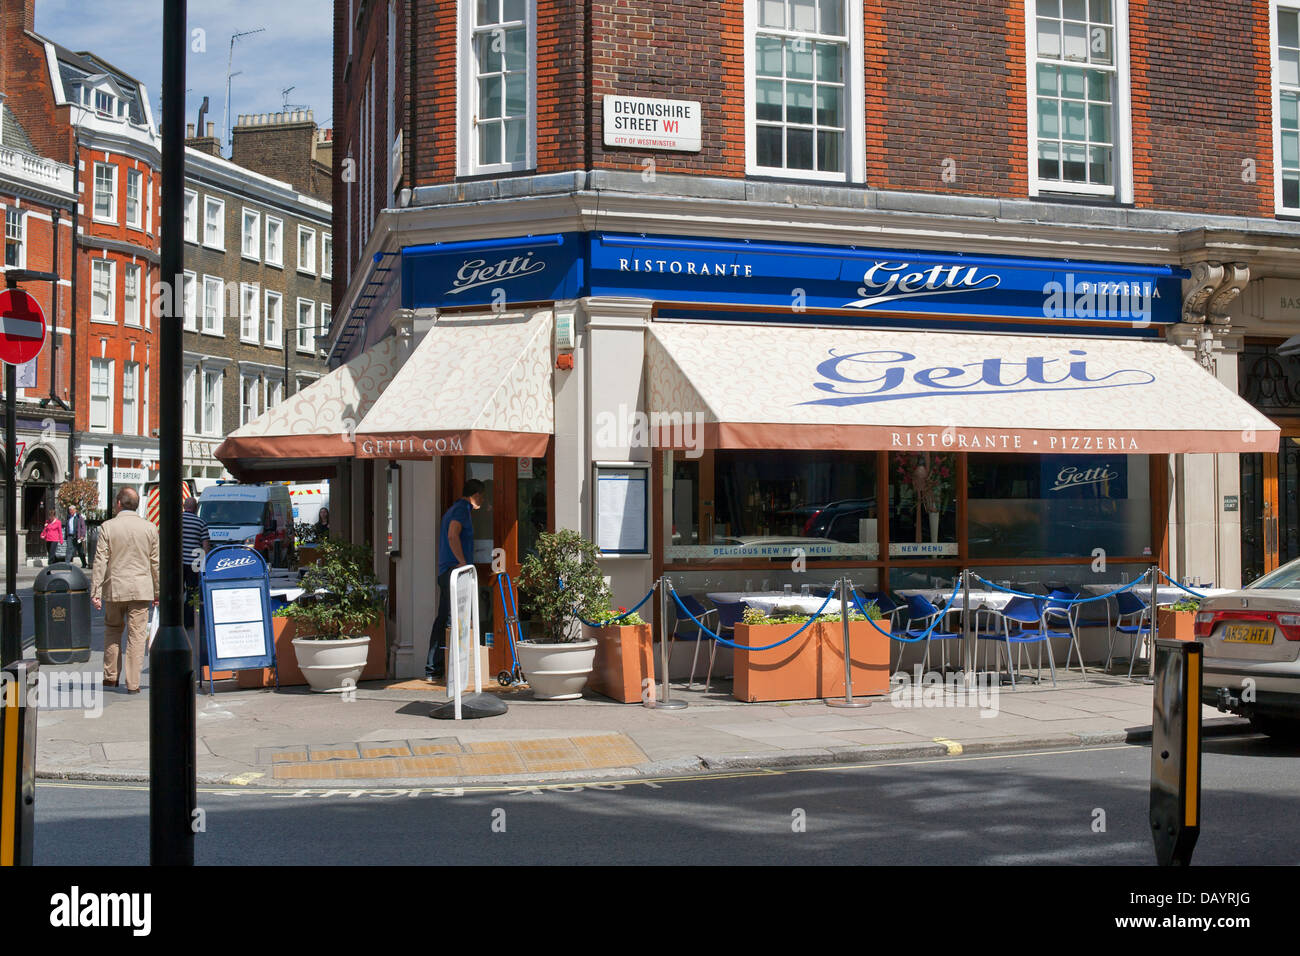 Restaurant Italien, Getti Marylebone High Street et Devonshire Street, Londres, Angleterre, Royaume-Uni, Europe Banque D'Images